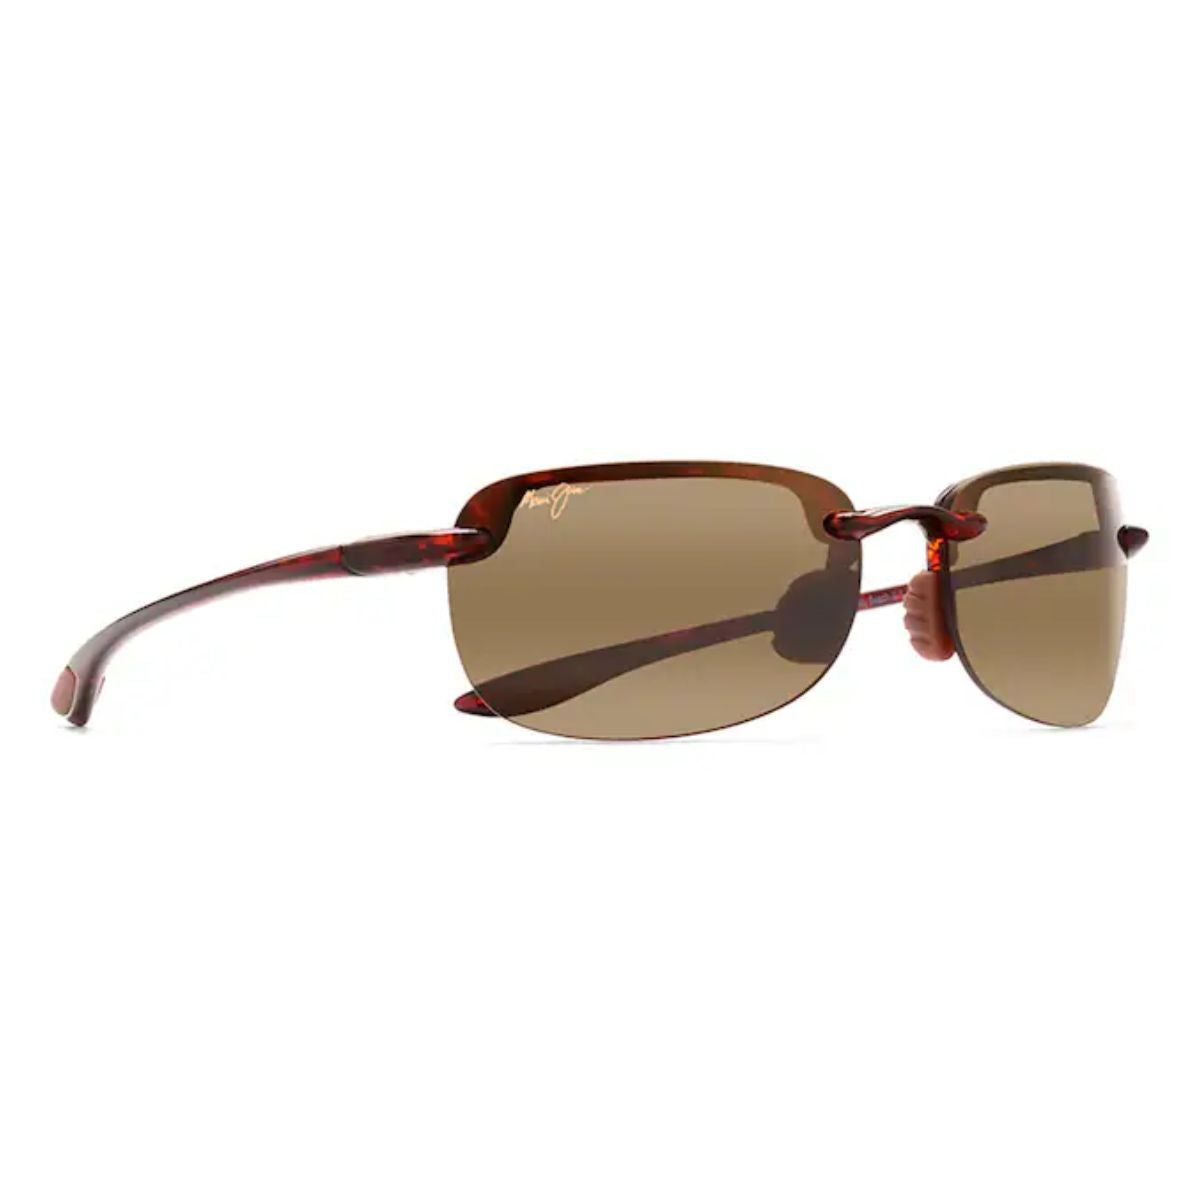 "Buy Stylish Maui Jim Sandy beach Sunglasses For Men's"